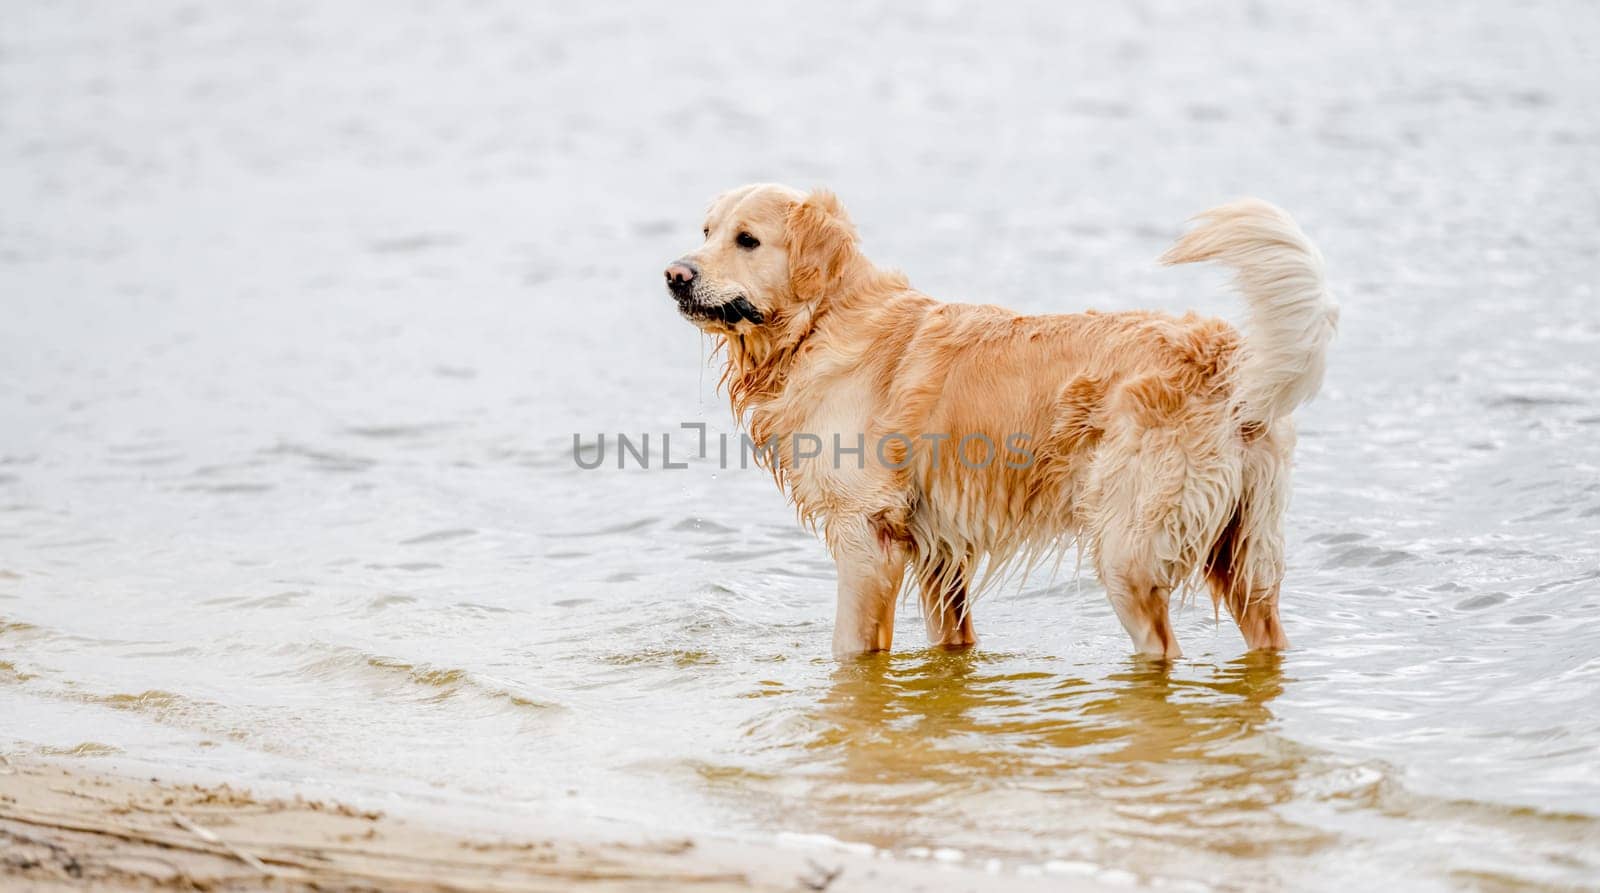 Golden retriever dog on the beach by GekaSkr